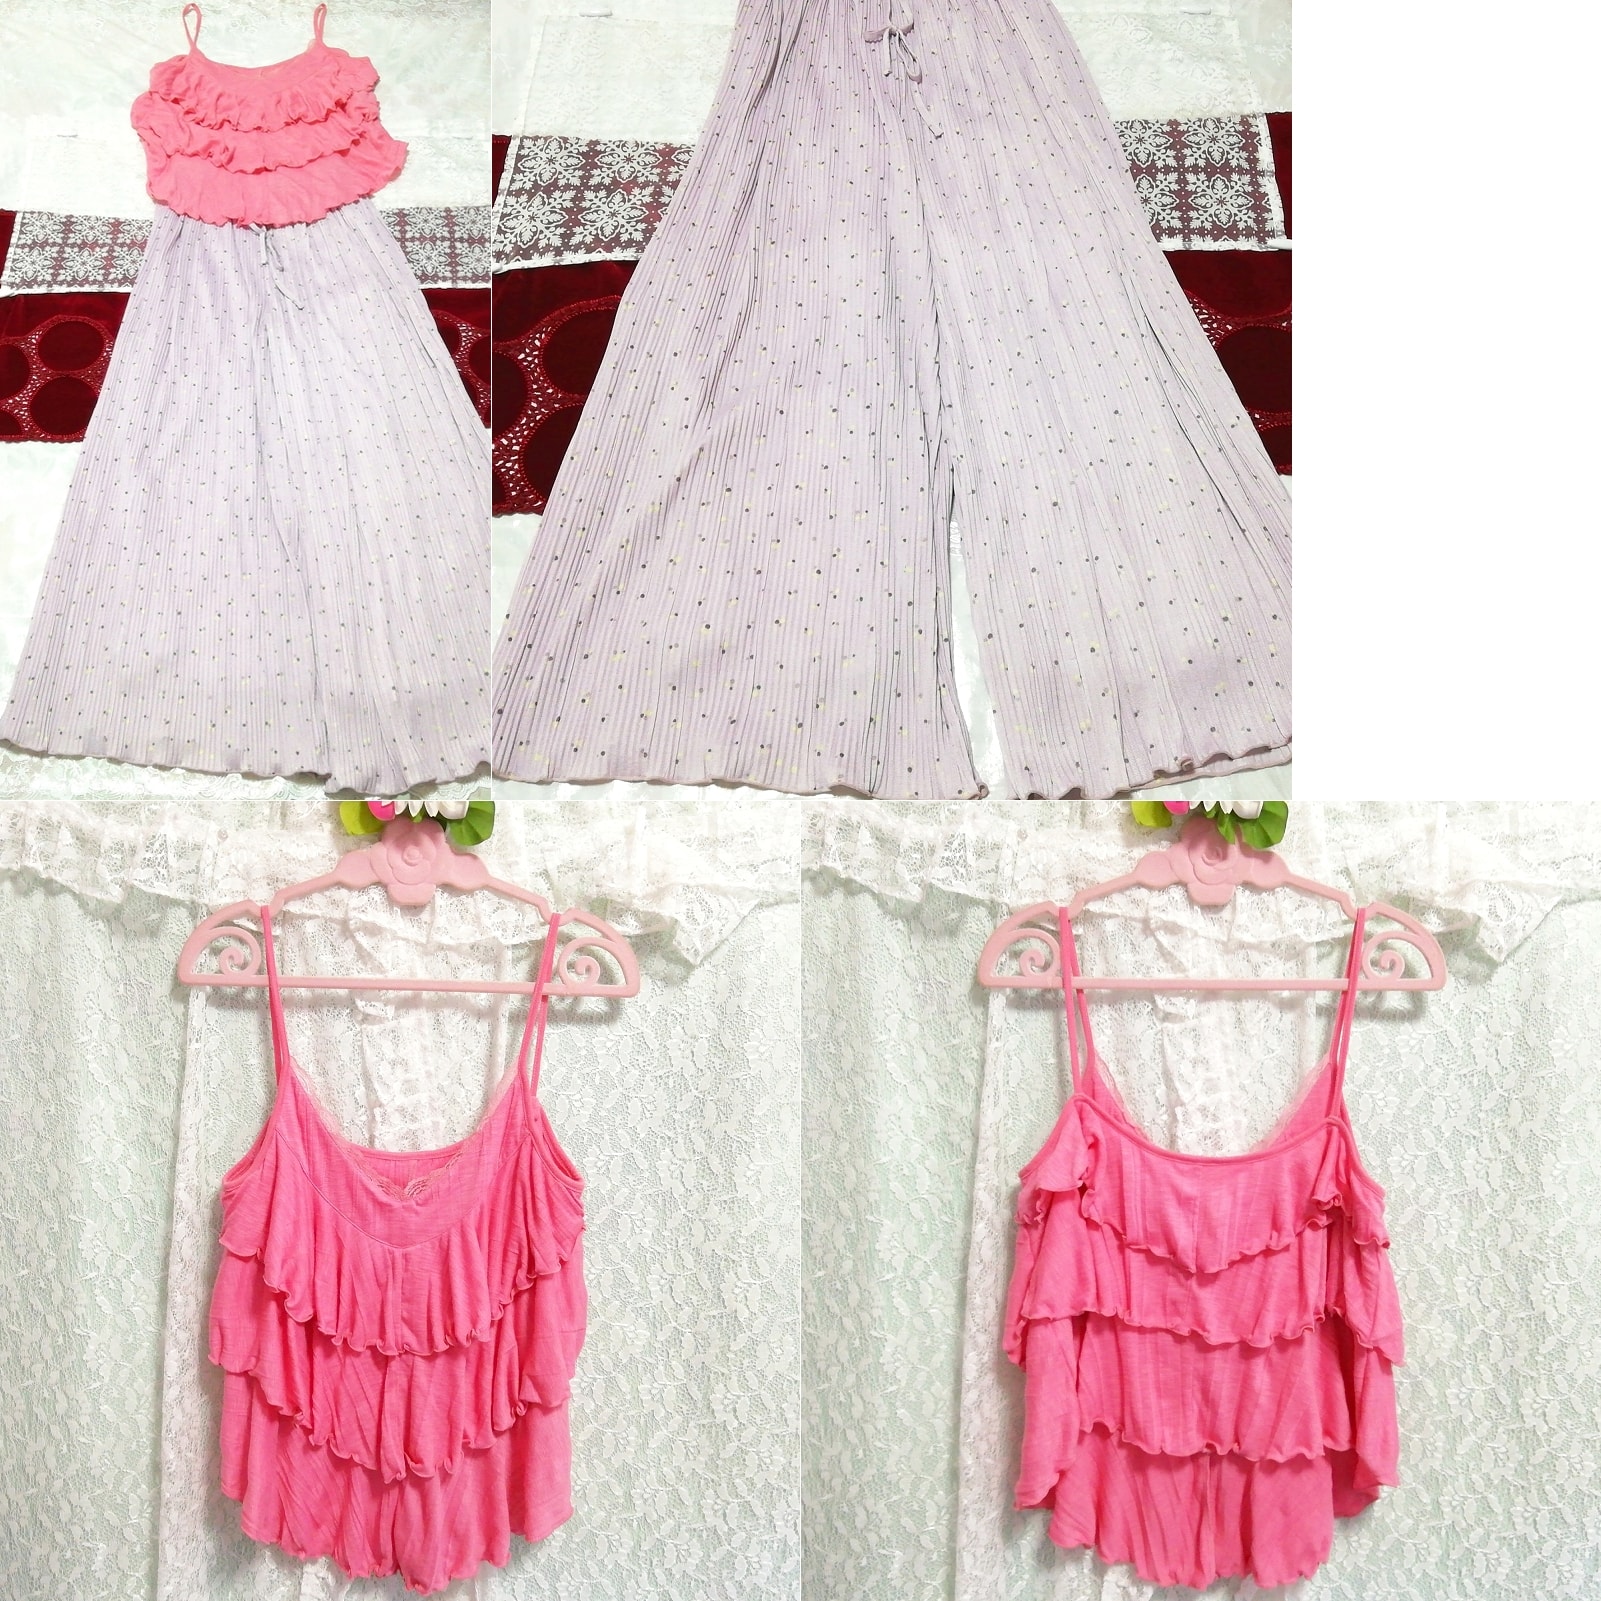 Pink frill camisole negligee nightgown nightwear purple floral pattern maxi skirt 2P, fashion, ladies' fashion, nightwear, pajamas